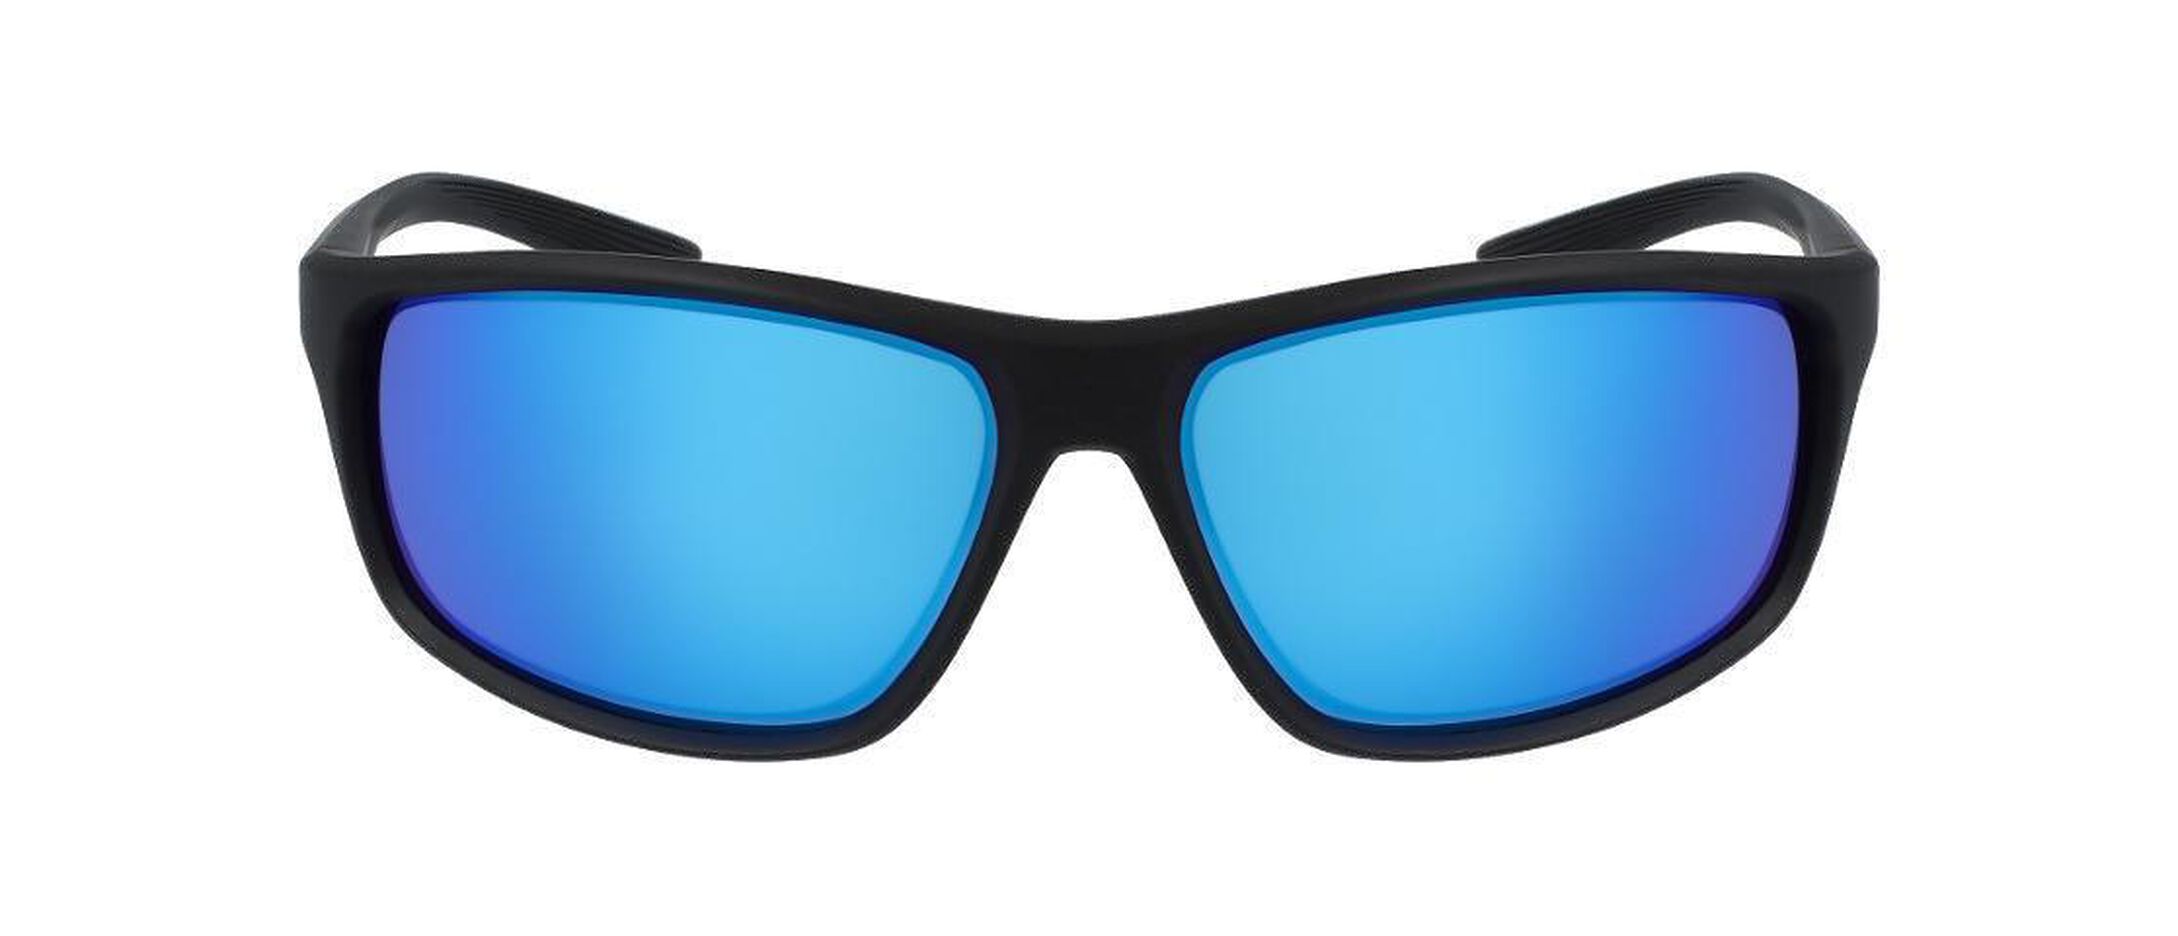 Nike NIKE ADRENALINE Sunglasses Prescription and Non-RX Lenses | Eyeconic